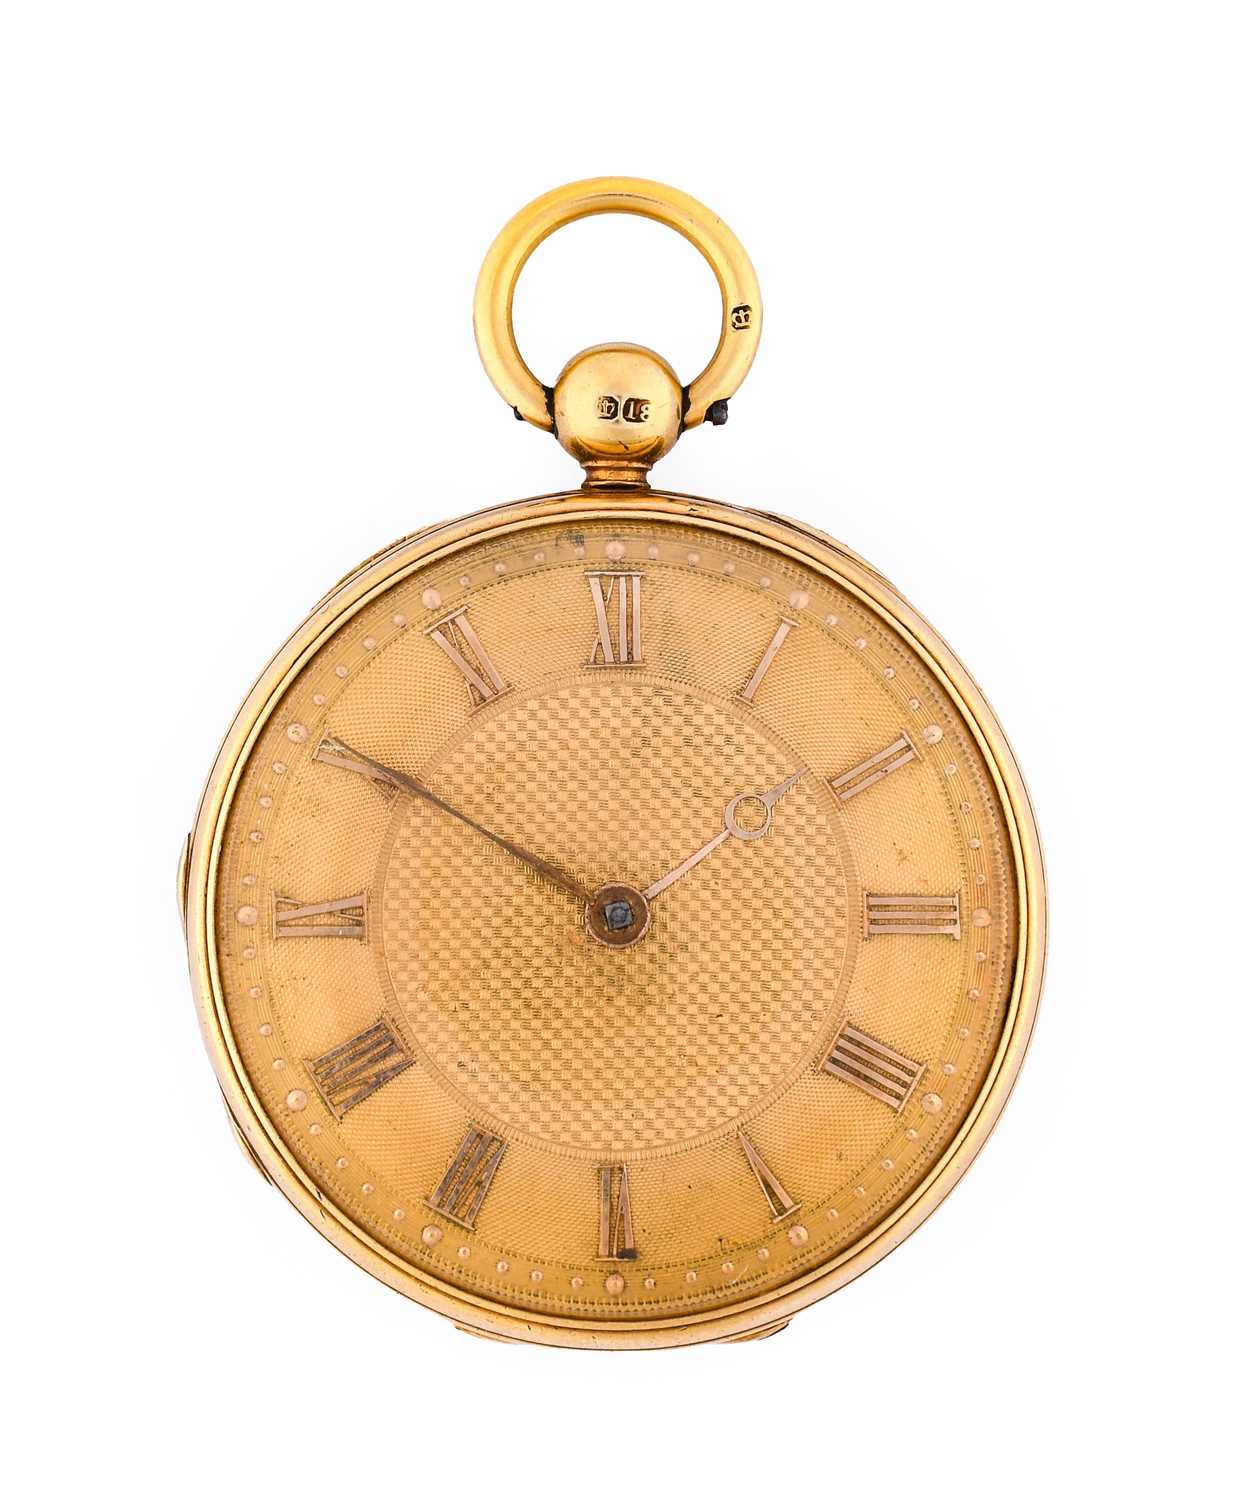 Earnshaw: An 18 Carat Gold Open Faced Pocket Watch, signed T Earnshaw, 119 High Holborn, London,